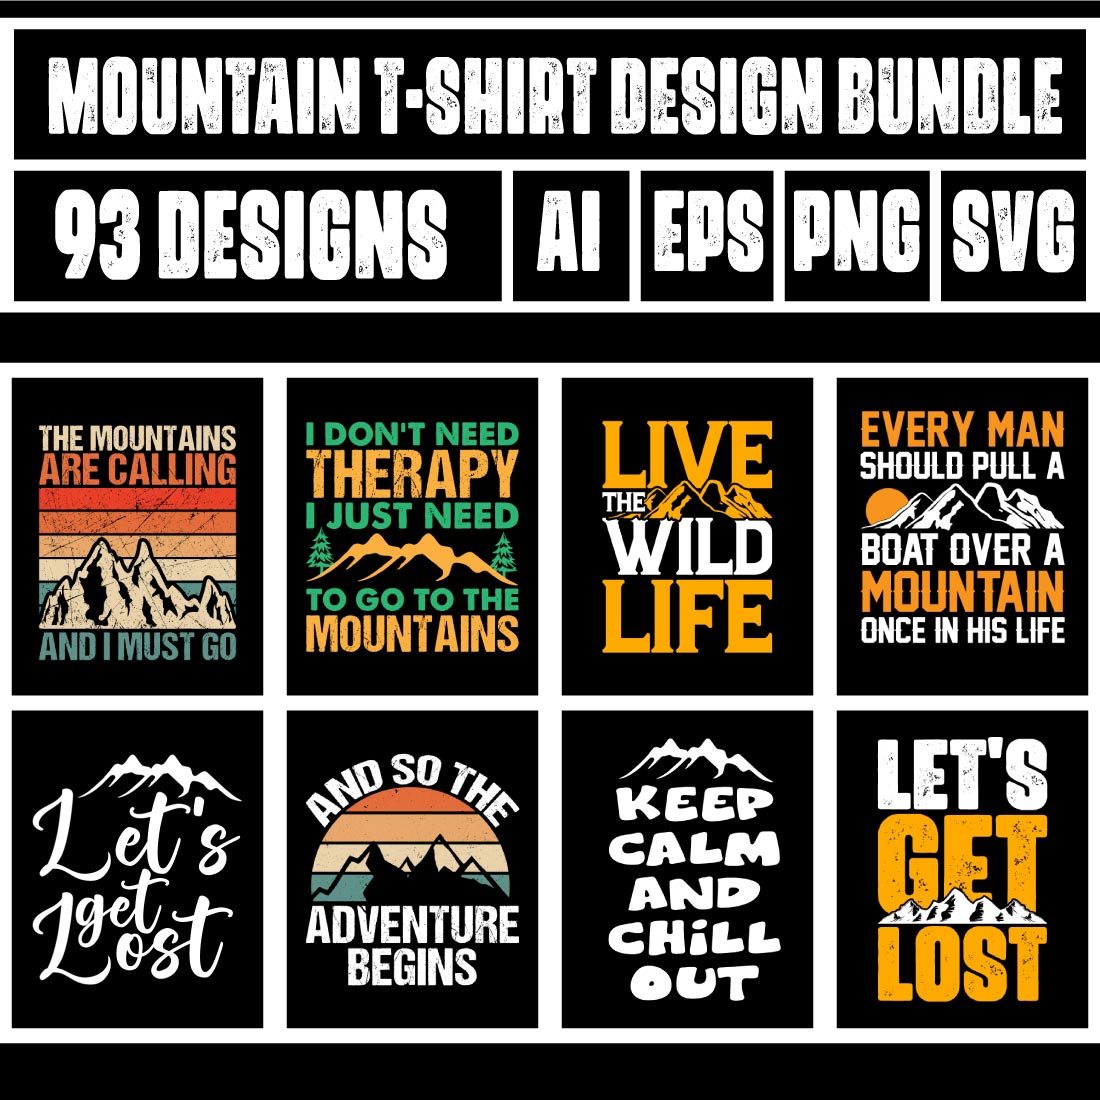 Mountain T-shirt Design Bundle 2 cover image.